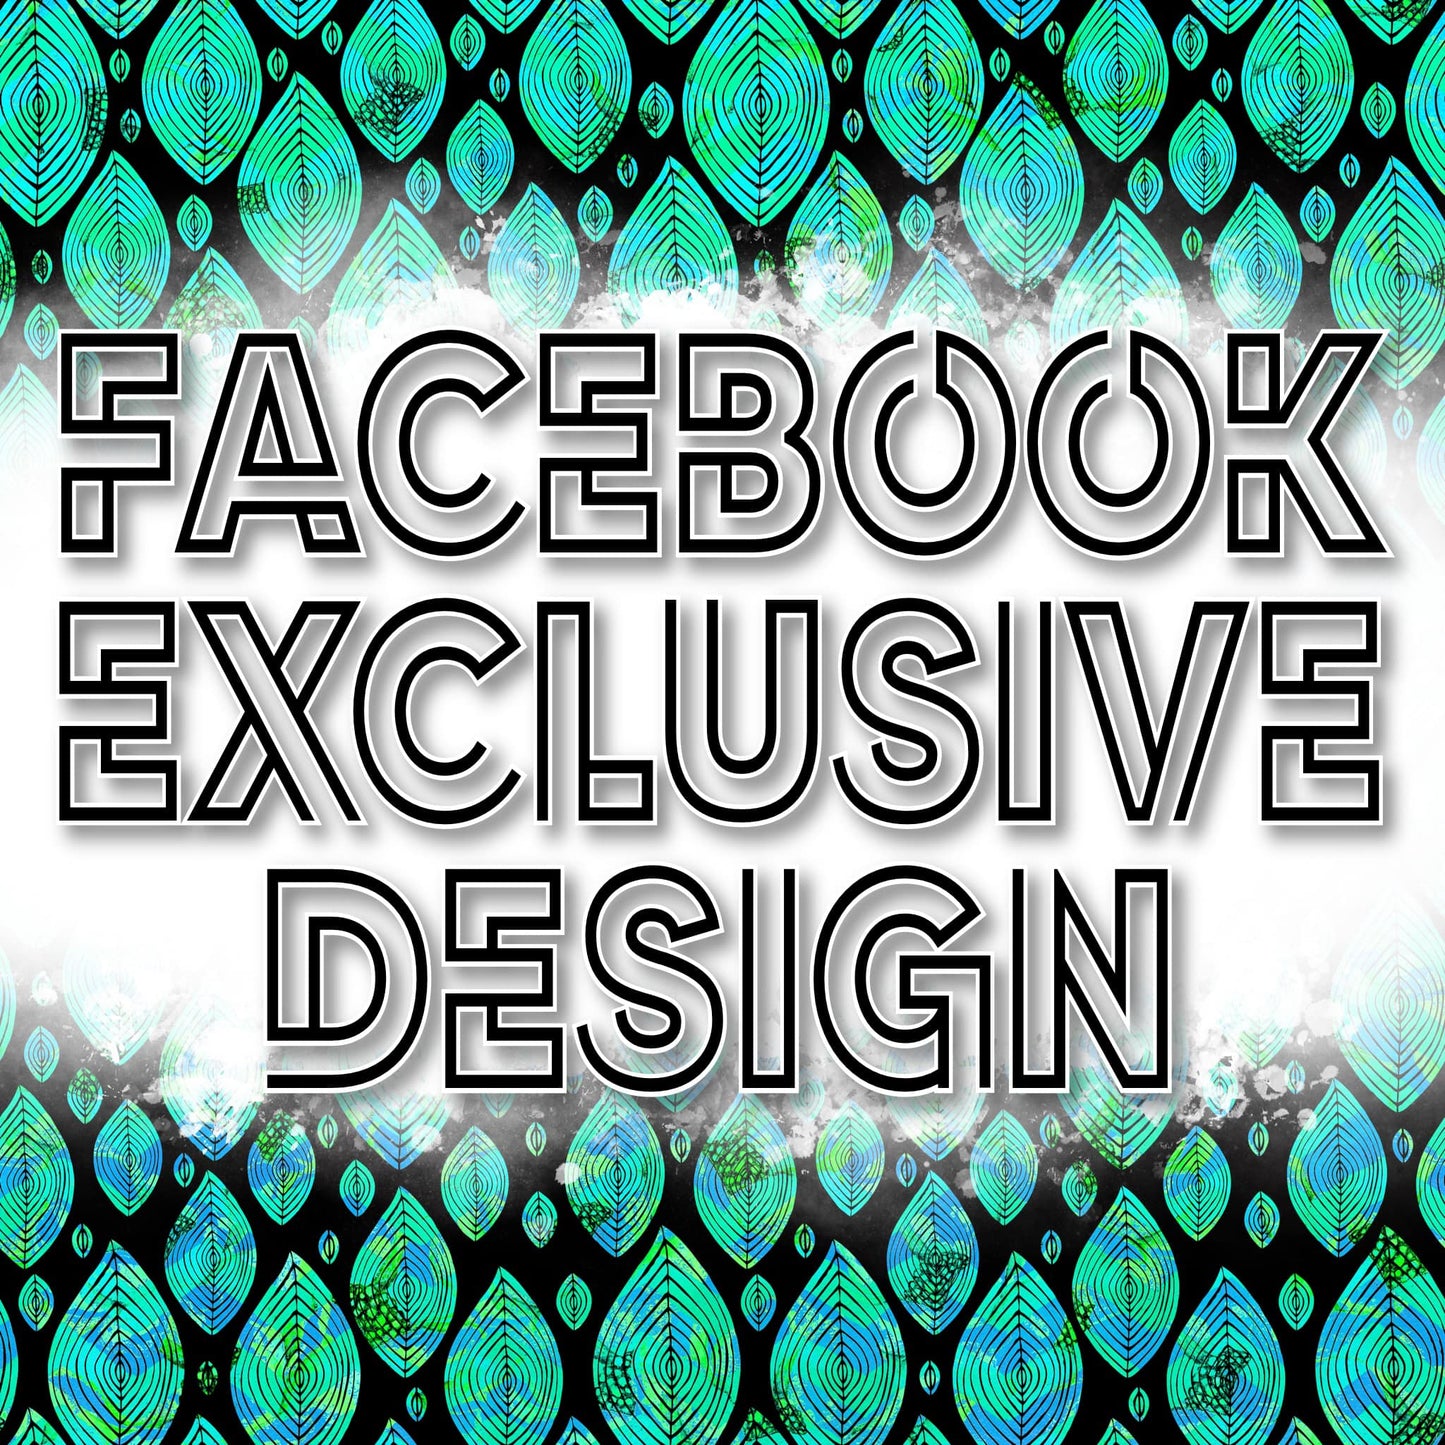 FTBL09 - Facebook Exclusive Digital Download